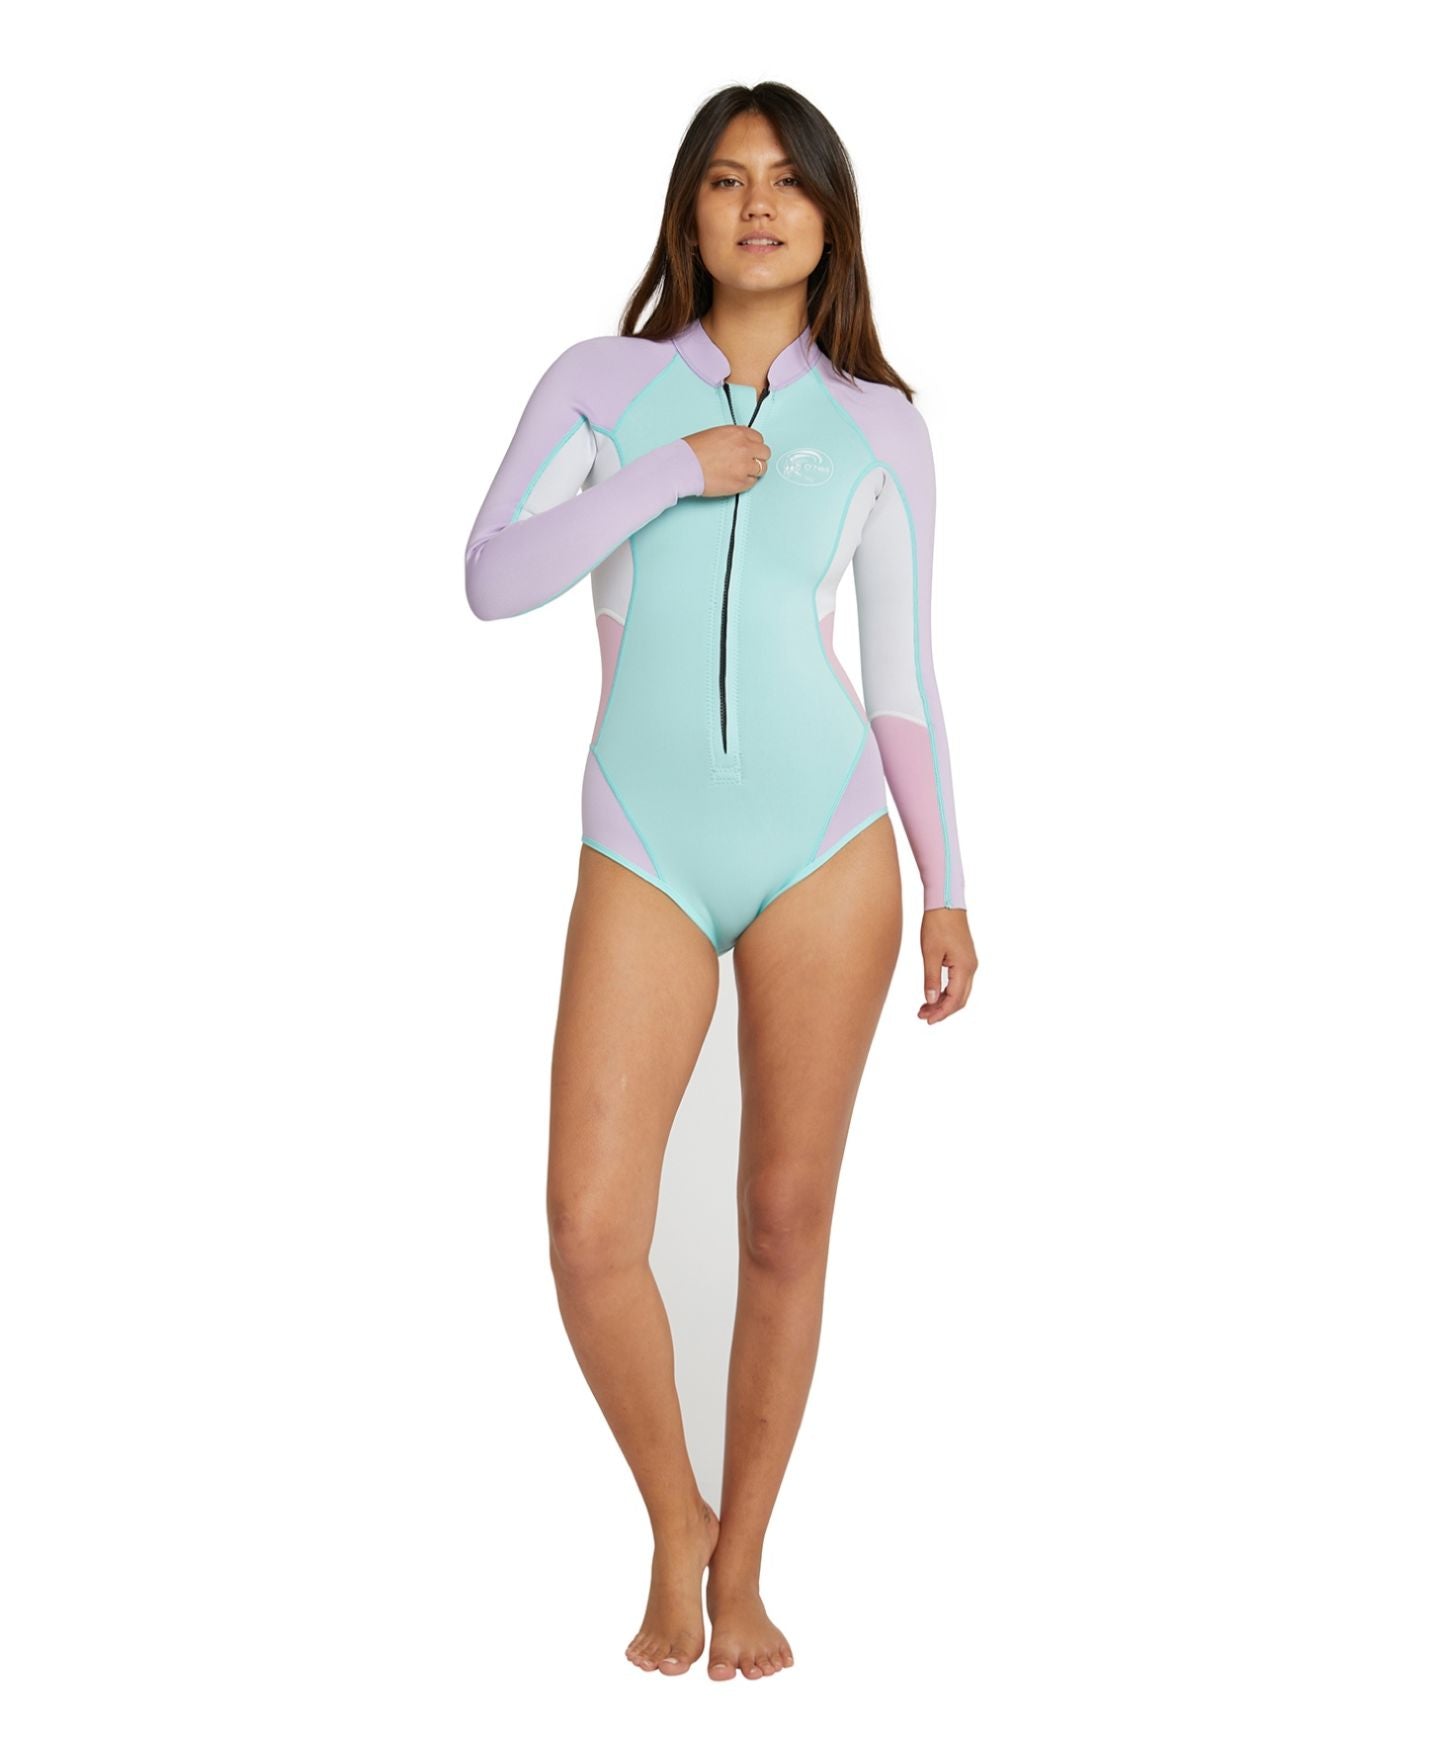 Women's Bahia 2mm Long Sleeve Cheeky Spring Suit Wetsuit - Lagoon